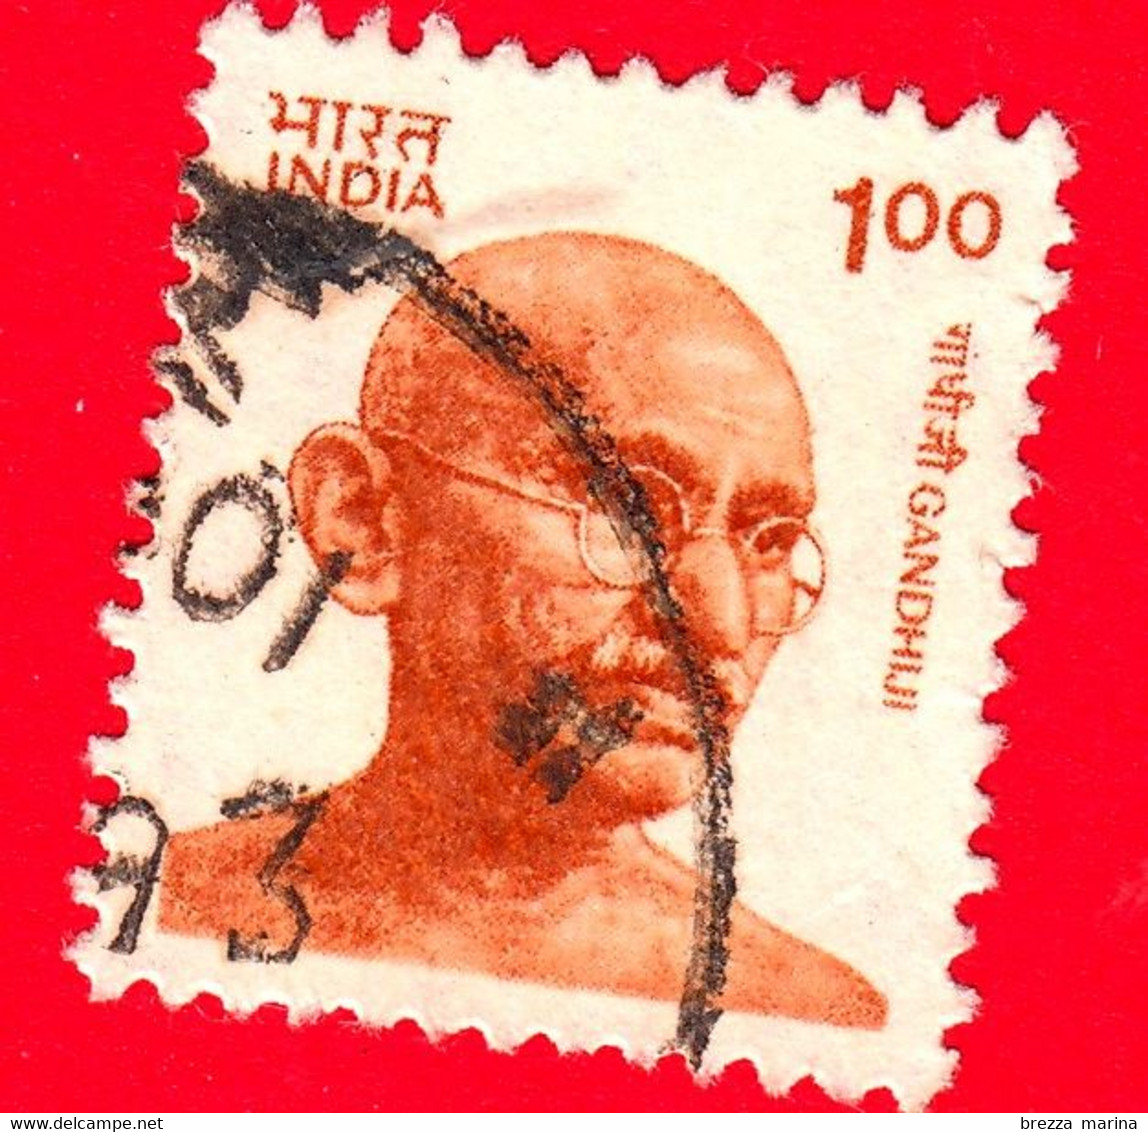 INDIA - Usato - 1991 - Mohandas Karamchand Gandhi (1869-1948) - 1.00 - Used Stamps